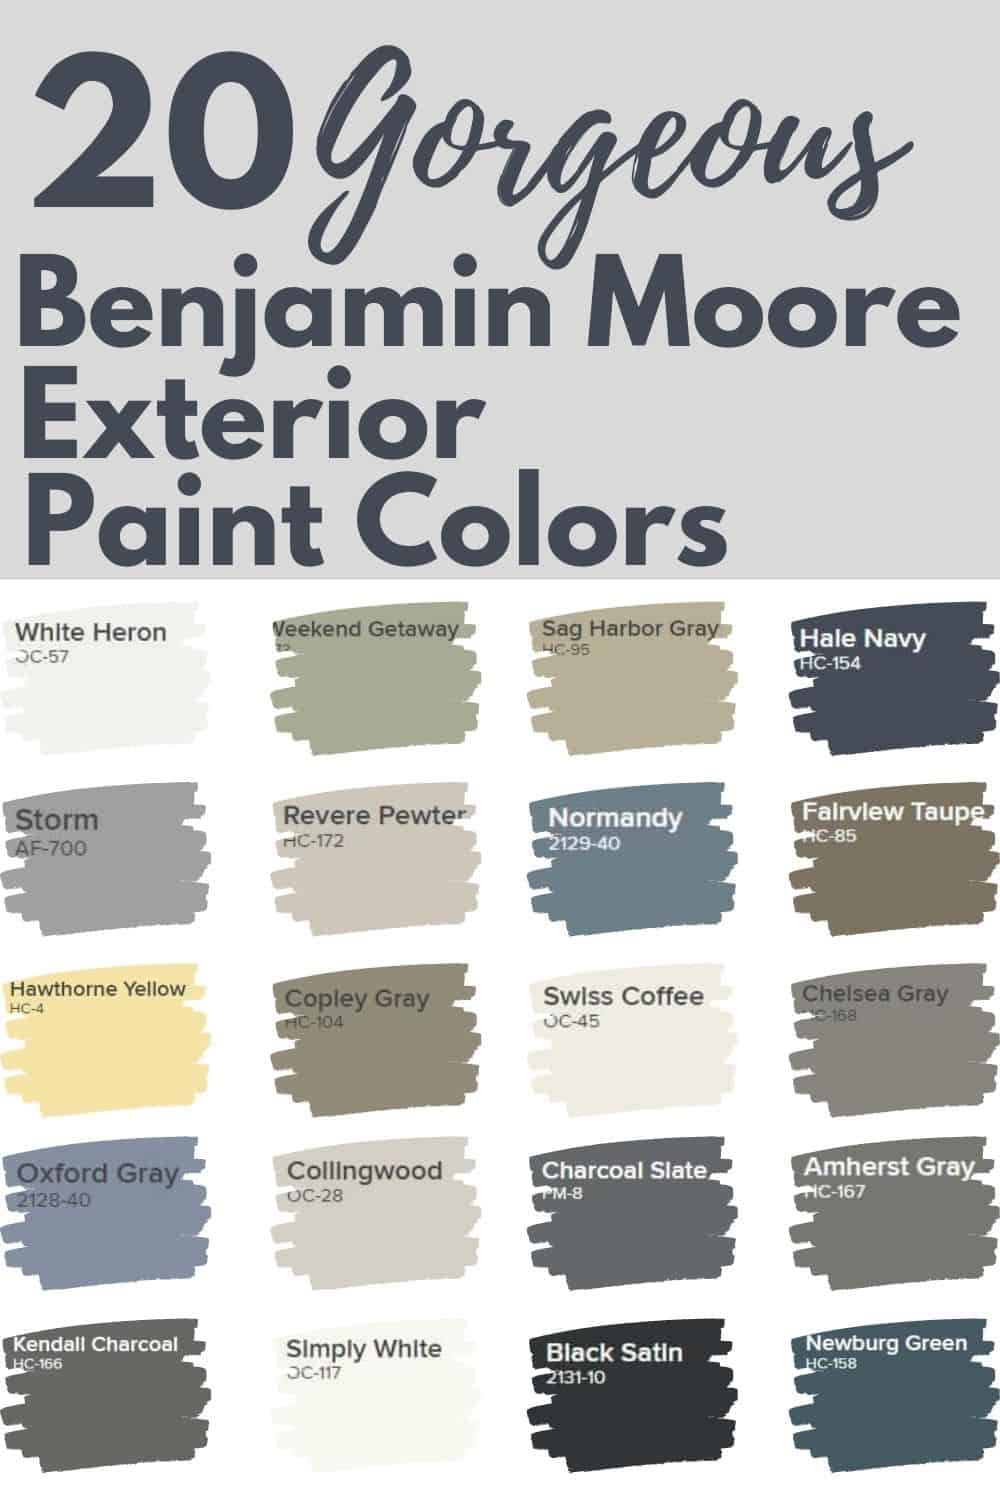 20 Amazing Benjamin Moore Exterior Paint Colors - West Magnolia Charm
